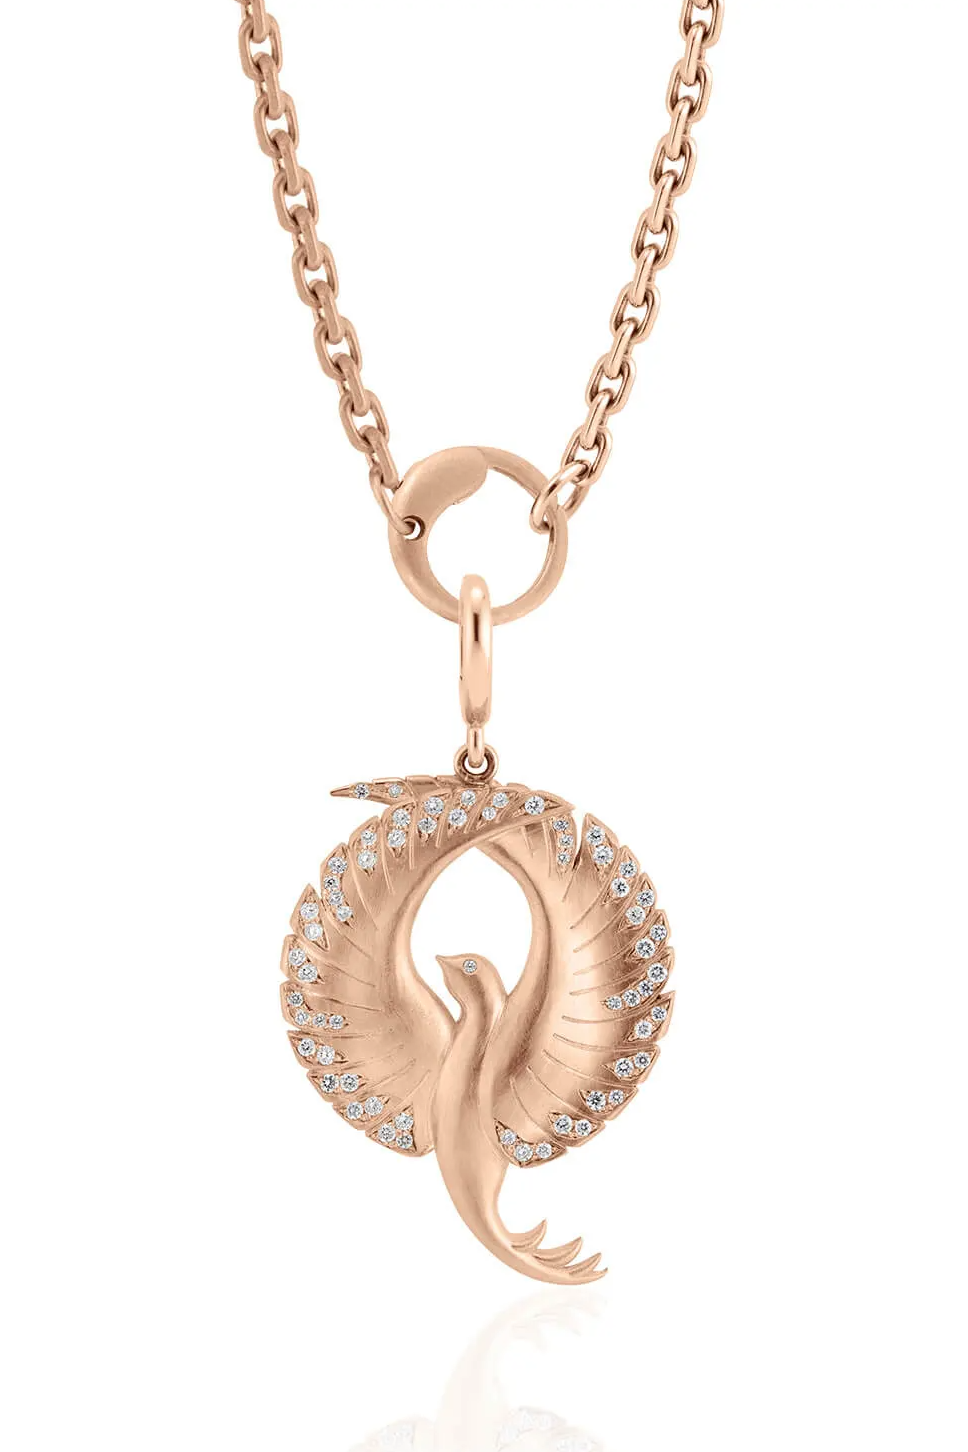 The phoenix pave diamond pendant